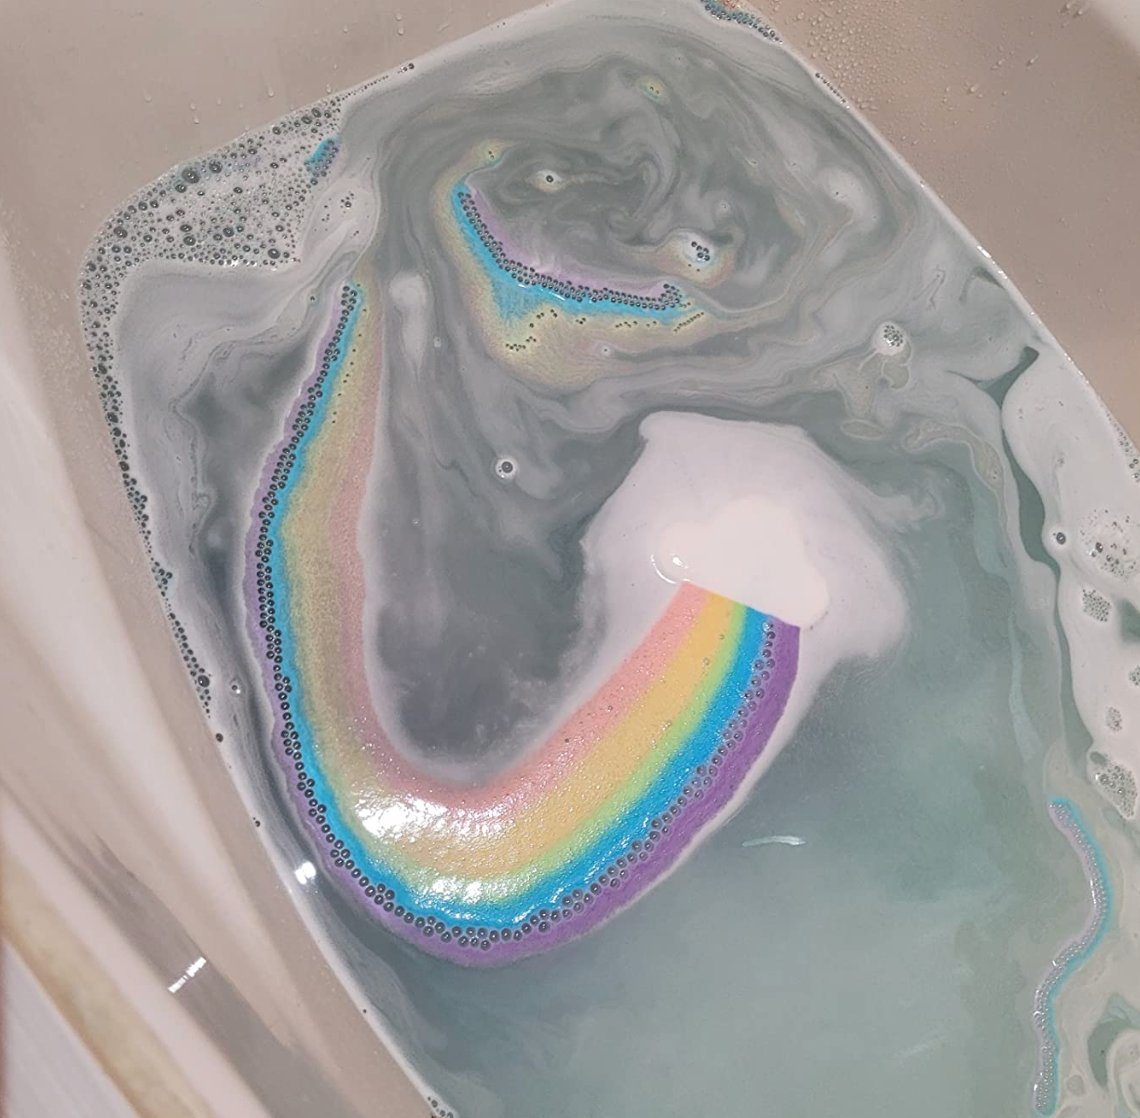 A rainbow bath fizz streaking color across the water 